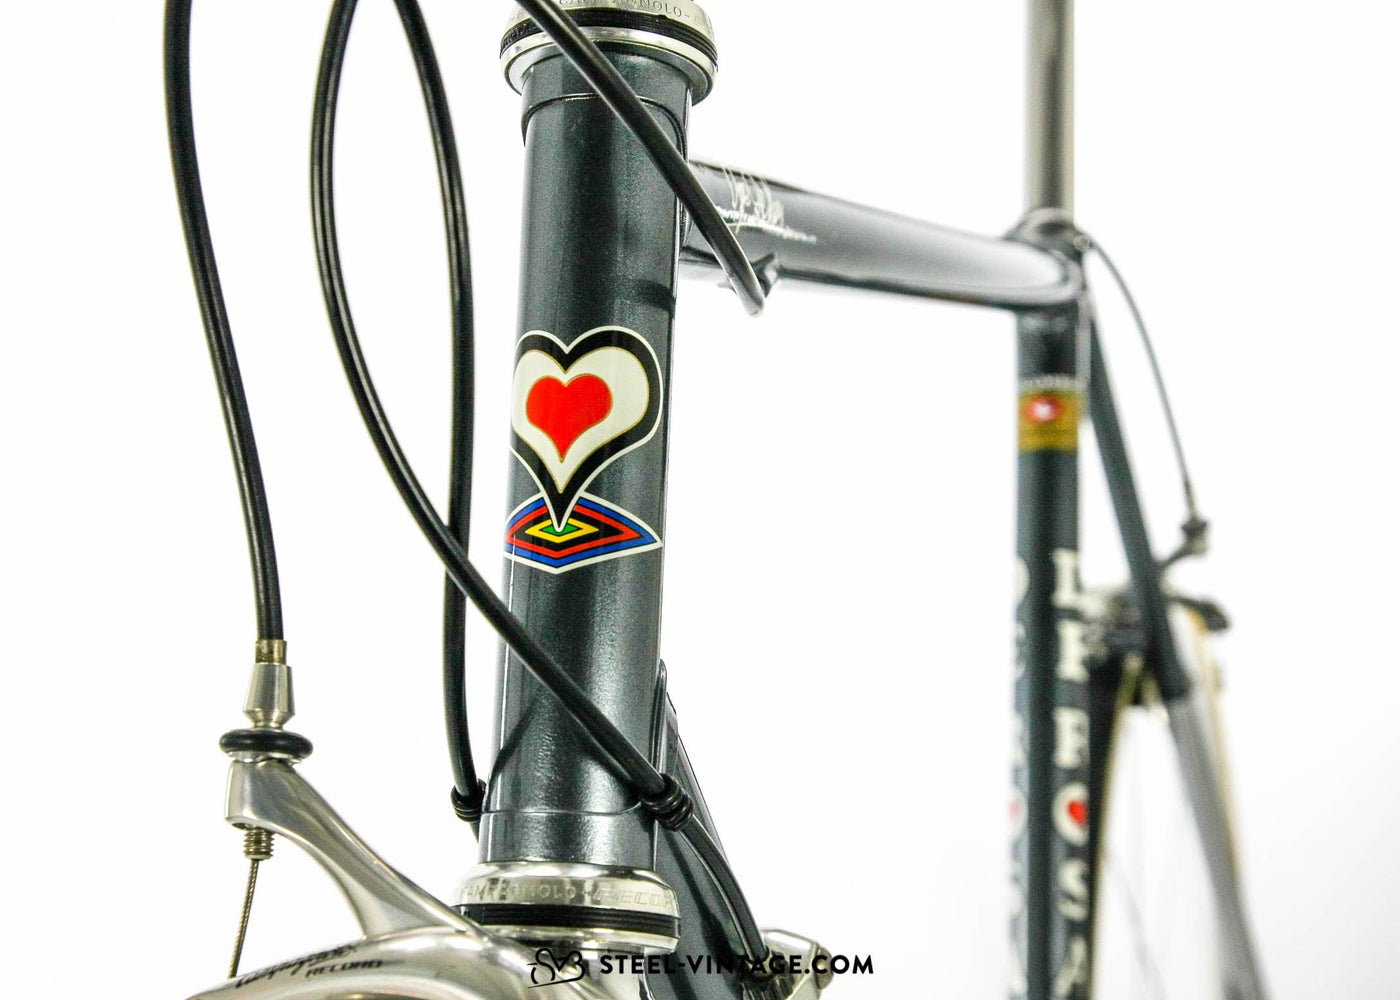 De Rosa Primato Classic Road Bicycle 1990s - Steel Vintage Bikes